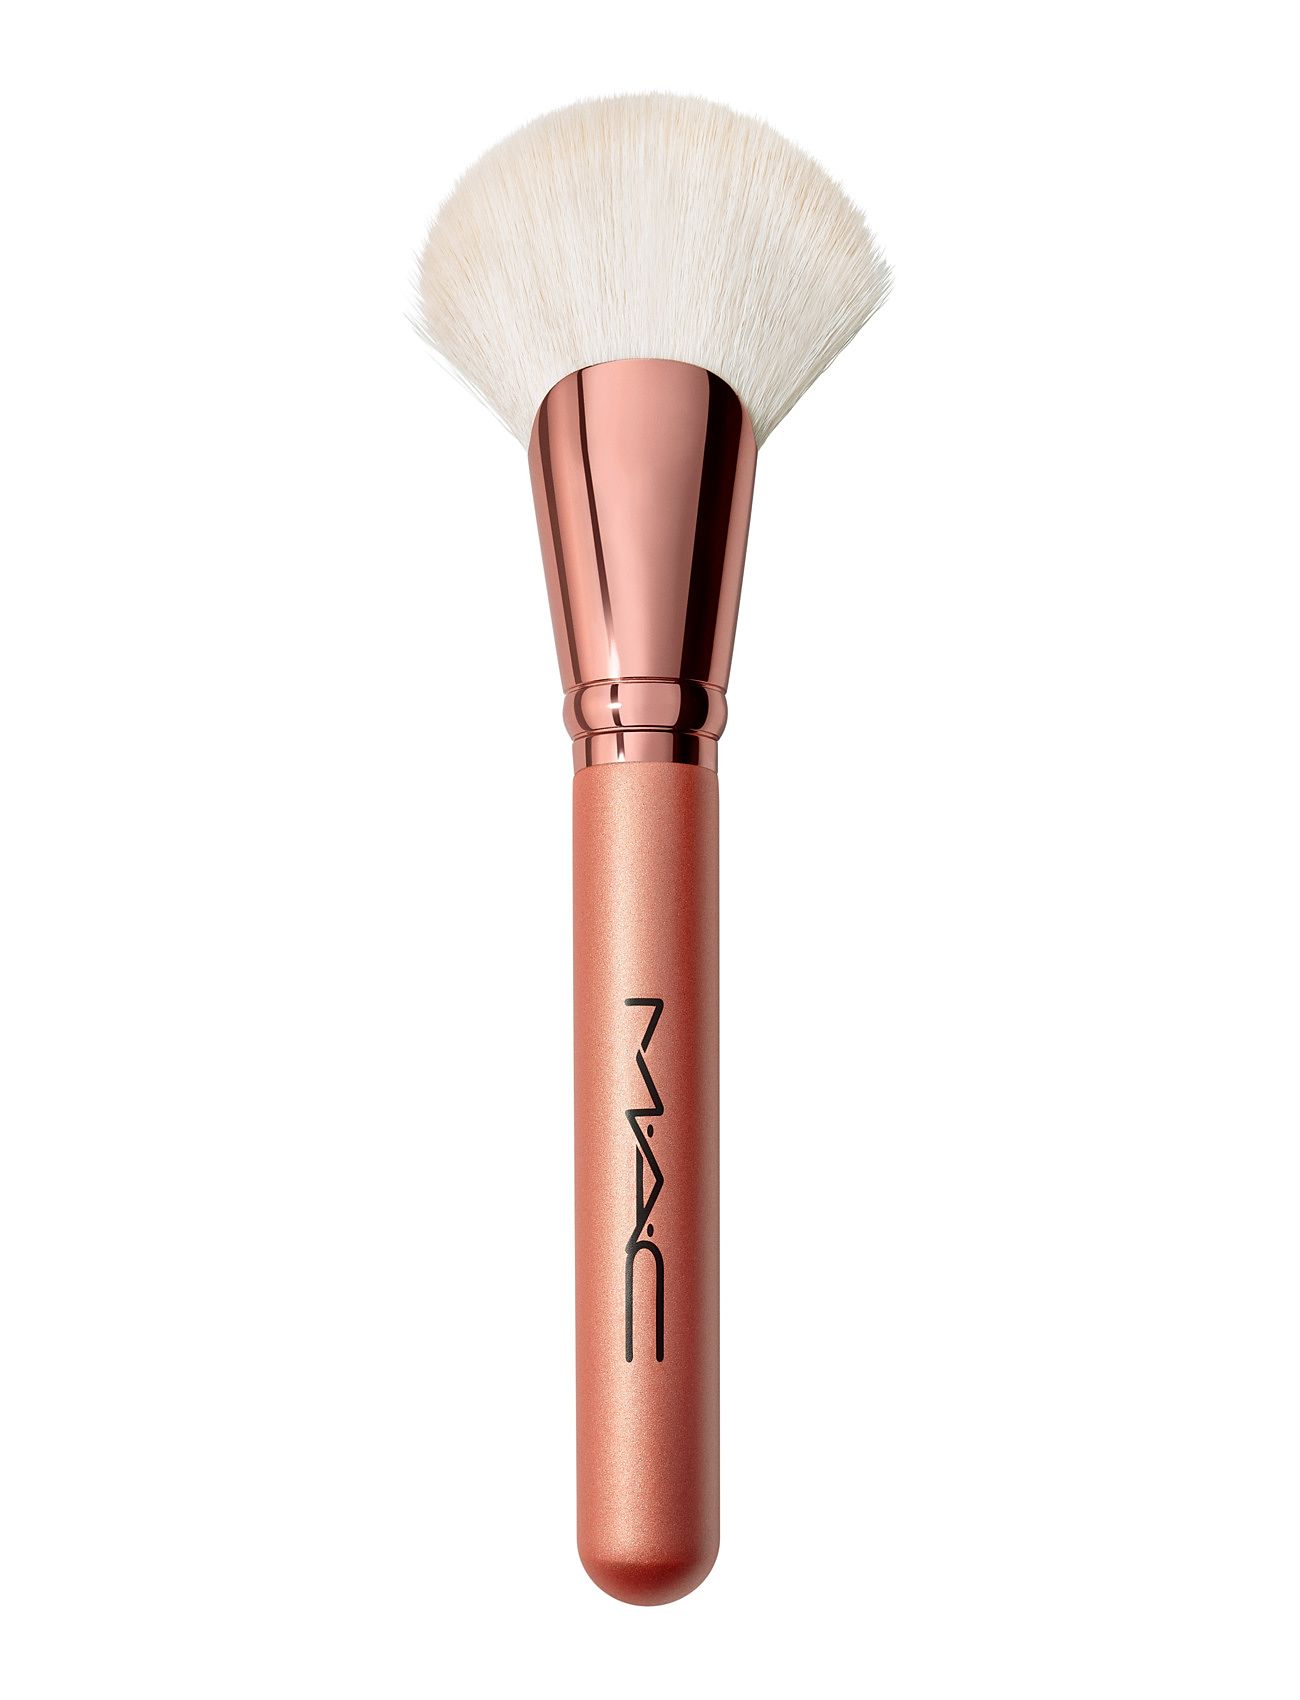 143S Bronzer Fan Brush Beauty Women Makeup Makeup Brushes Face Brushes Highlight Brushes Nude MAC